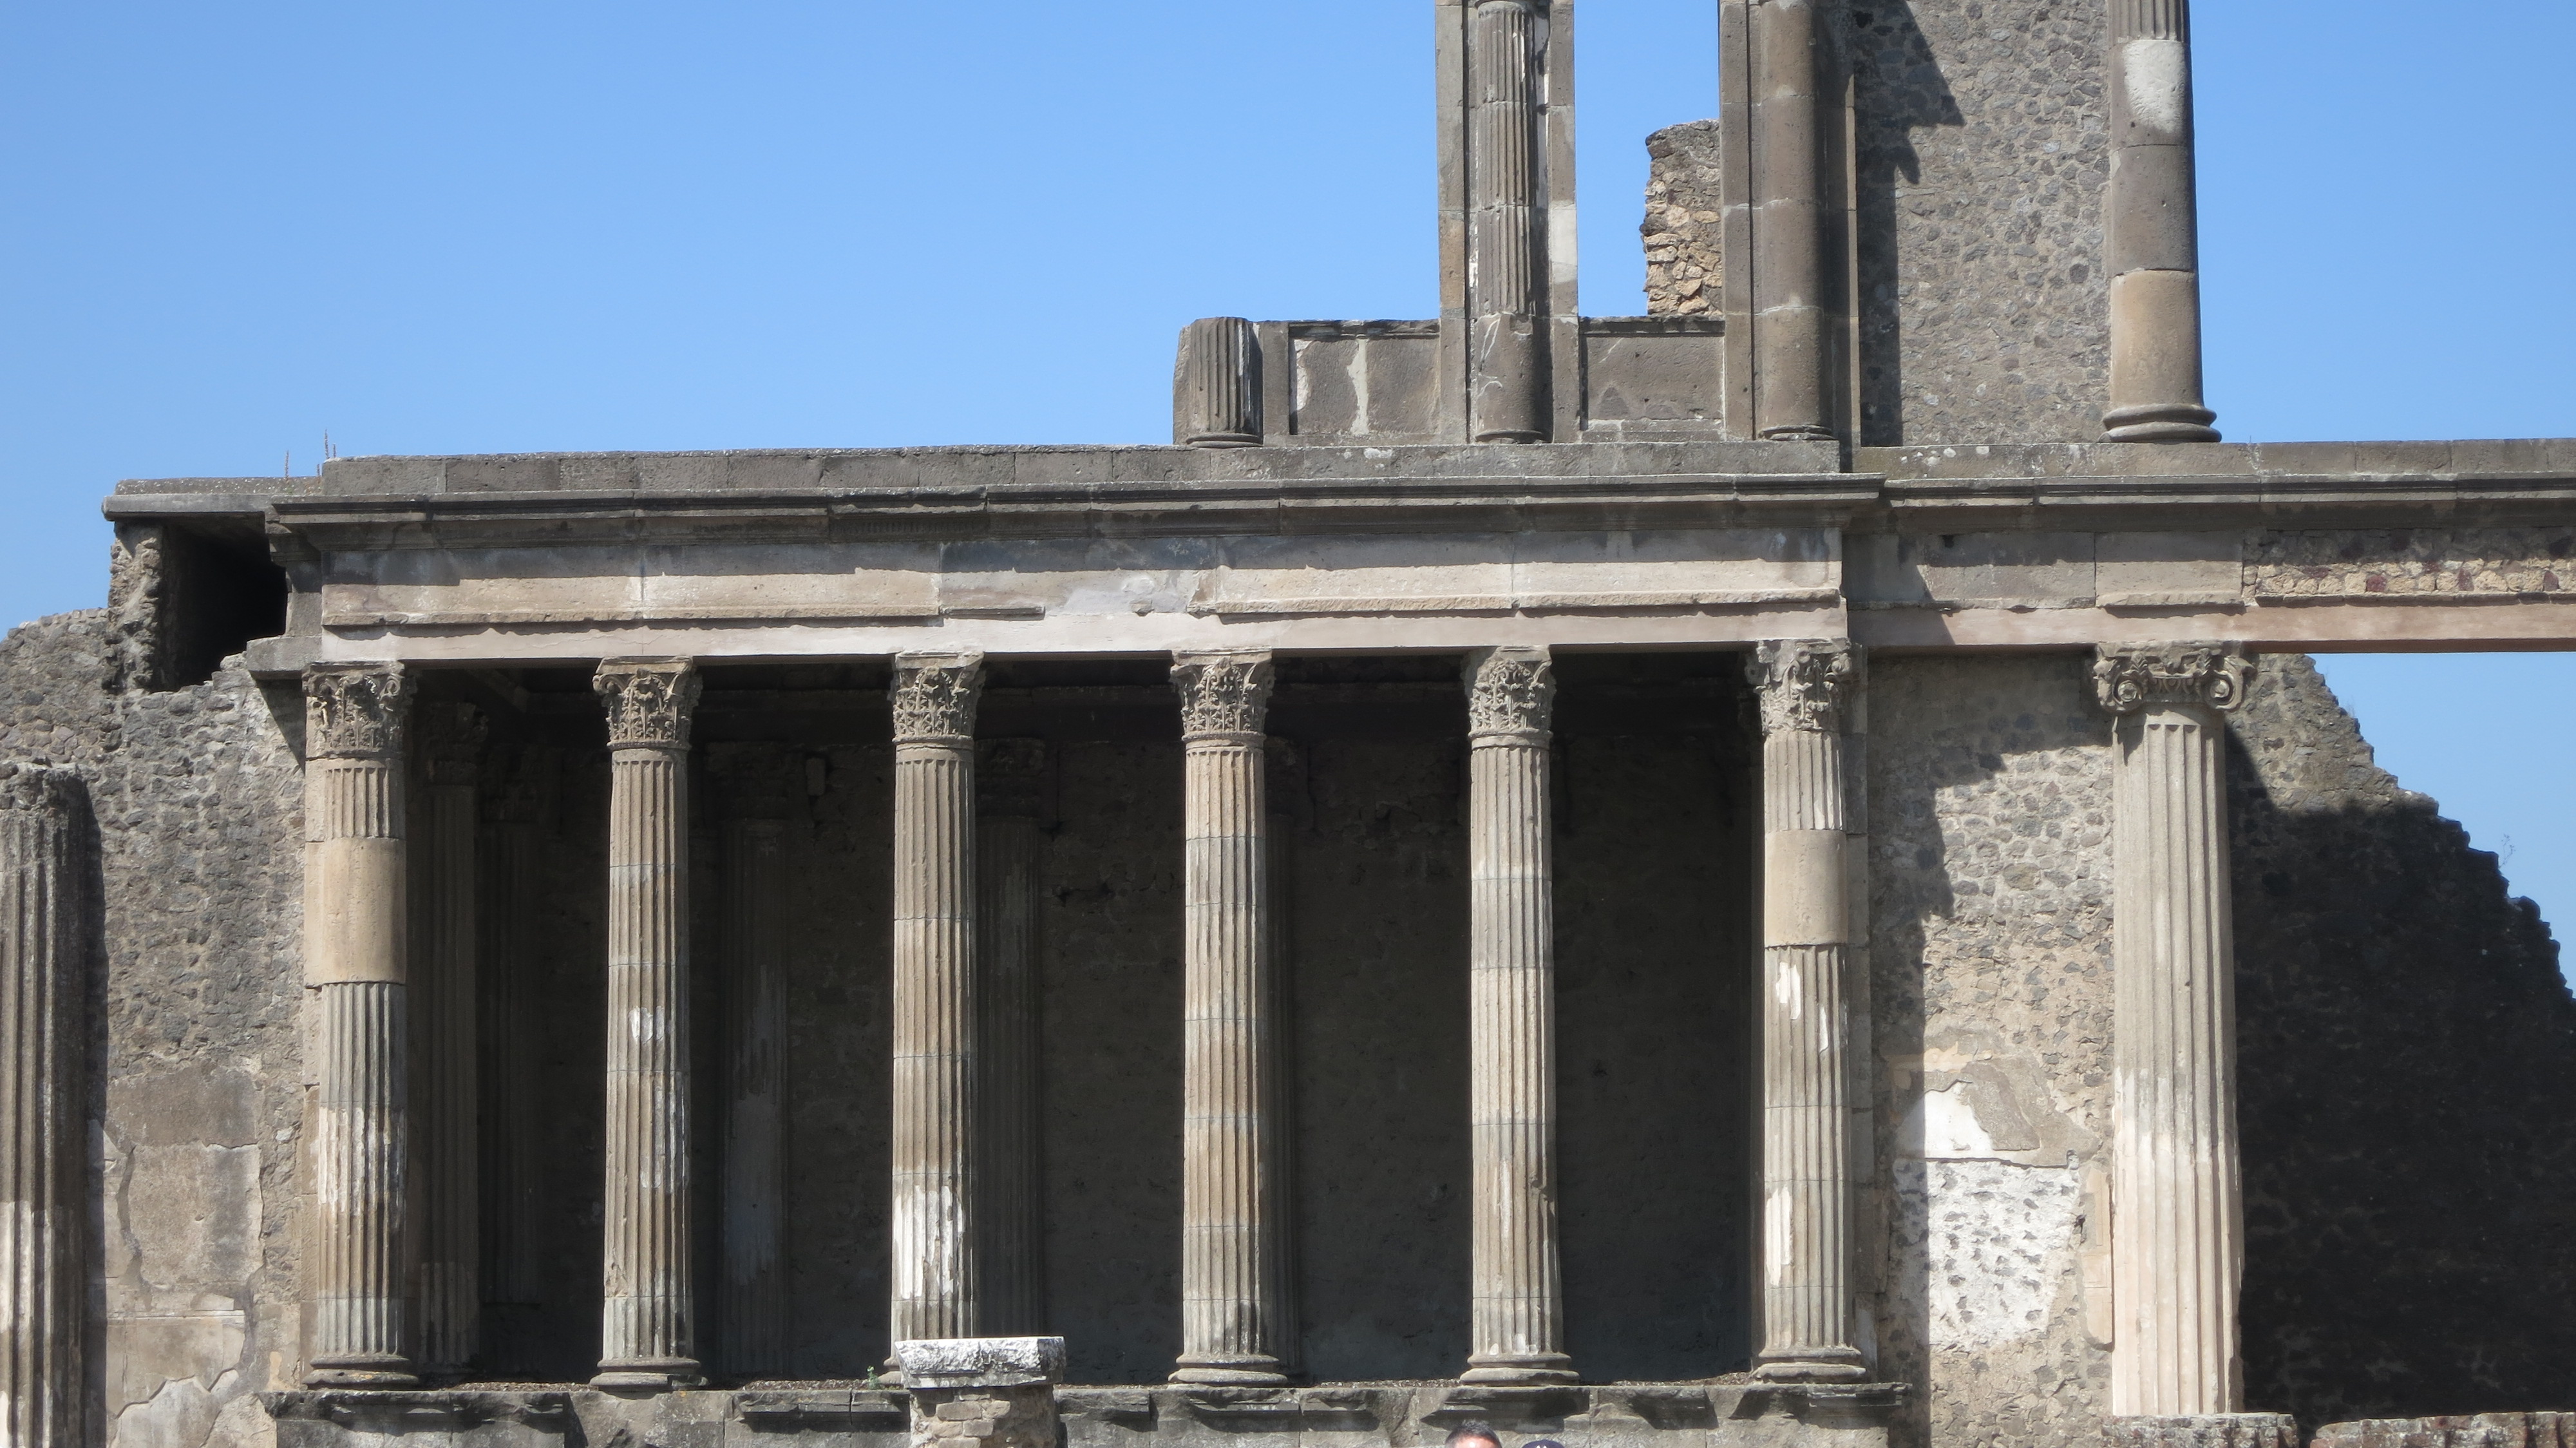 https://d33wubrfki0l68.cloudfront.net/7158018ddda7b6cd6818d97e14a0acb7e6017948/db4d2/posts/06-18-19/basilica-of-pompeii-tribunal.jpg